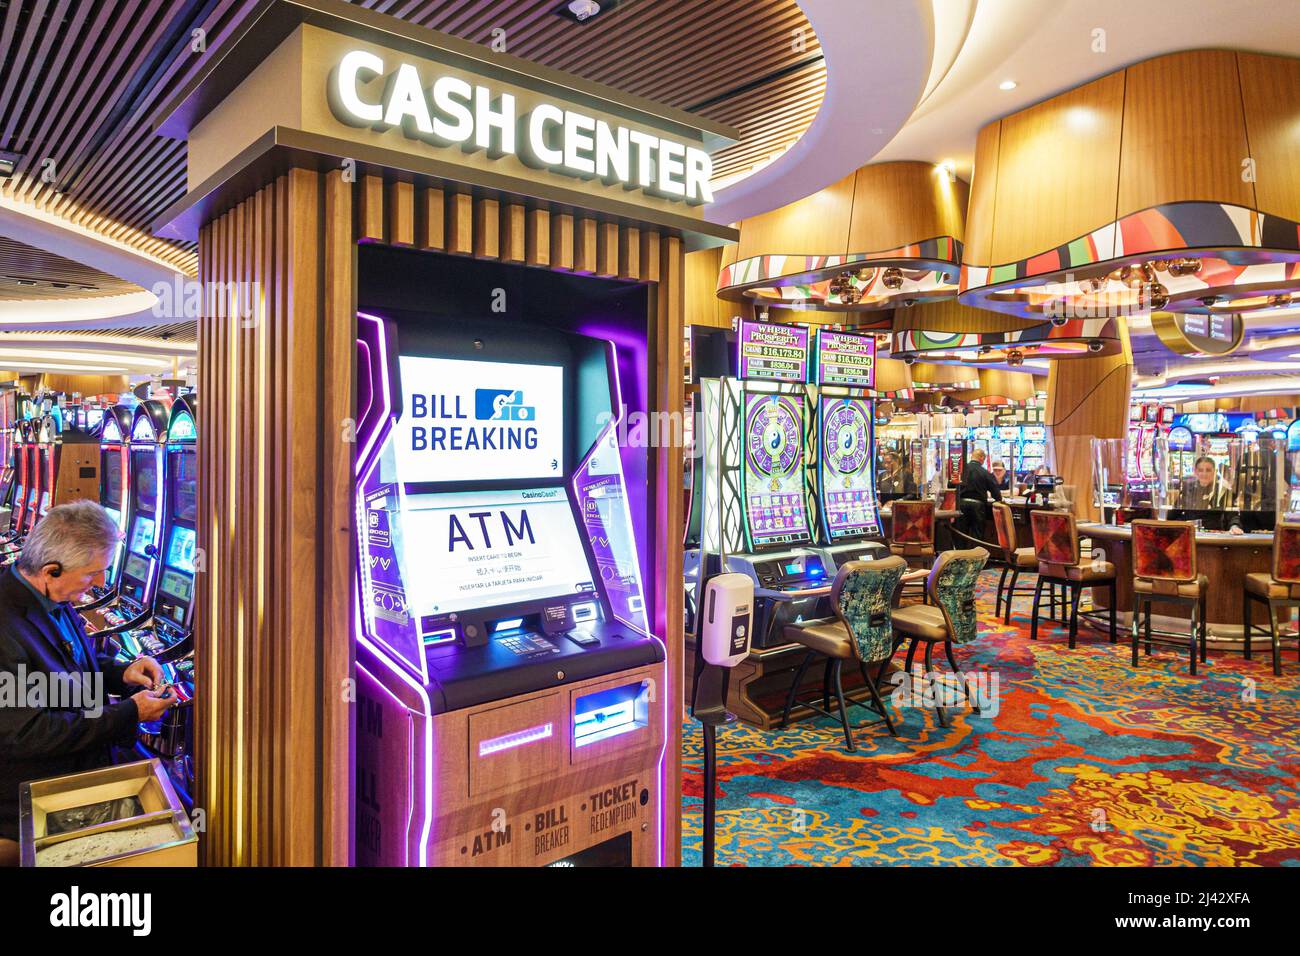 Hollywood Florida Seminole Hard Rock Hotel & Casino tribe tribal reservation inside interior cash center centre ATM machine gambling Stock Photo